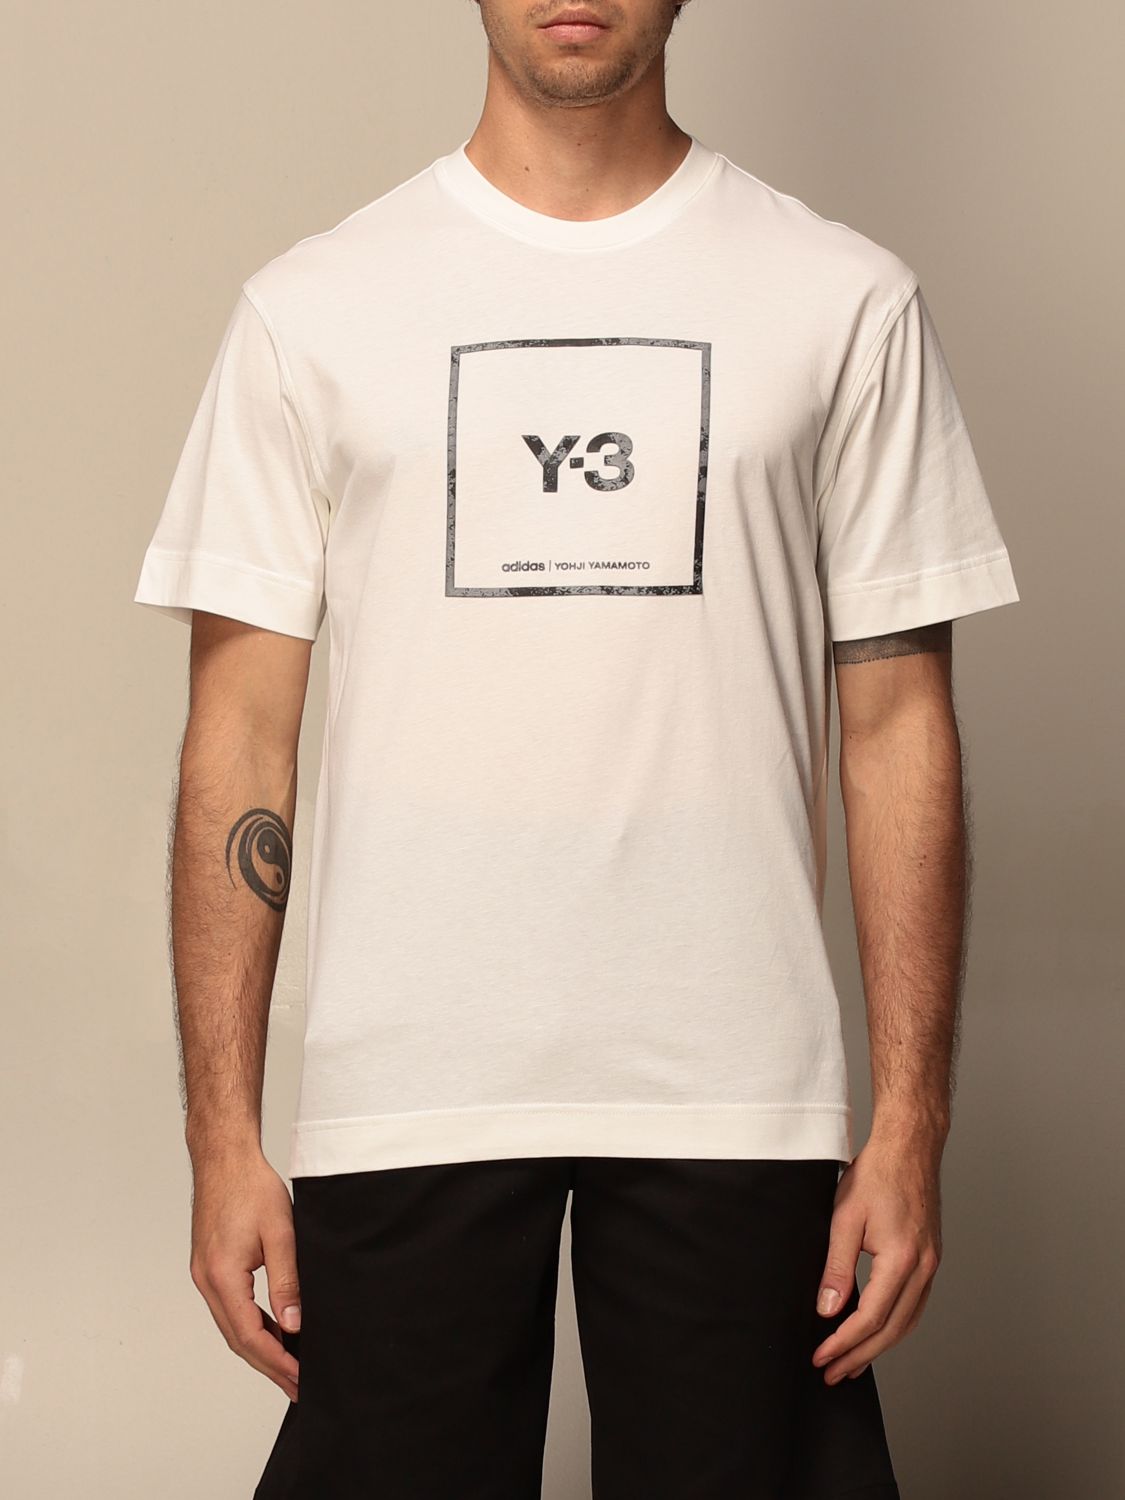 Y-3: logo T-shirt - White | Y-3 t-shirt GV6061 online on GIGLIO.COM